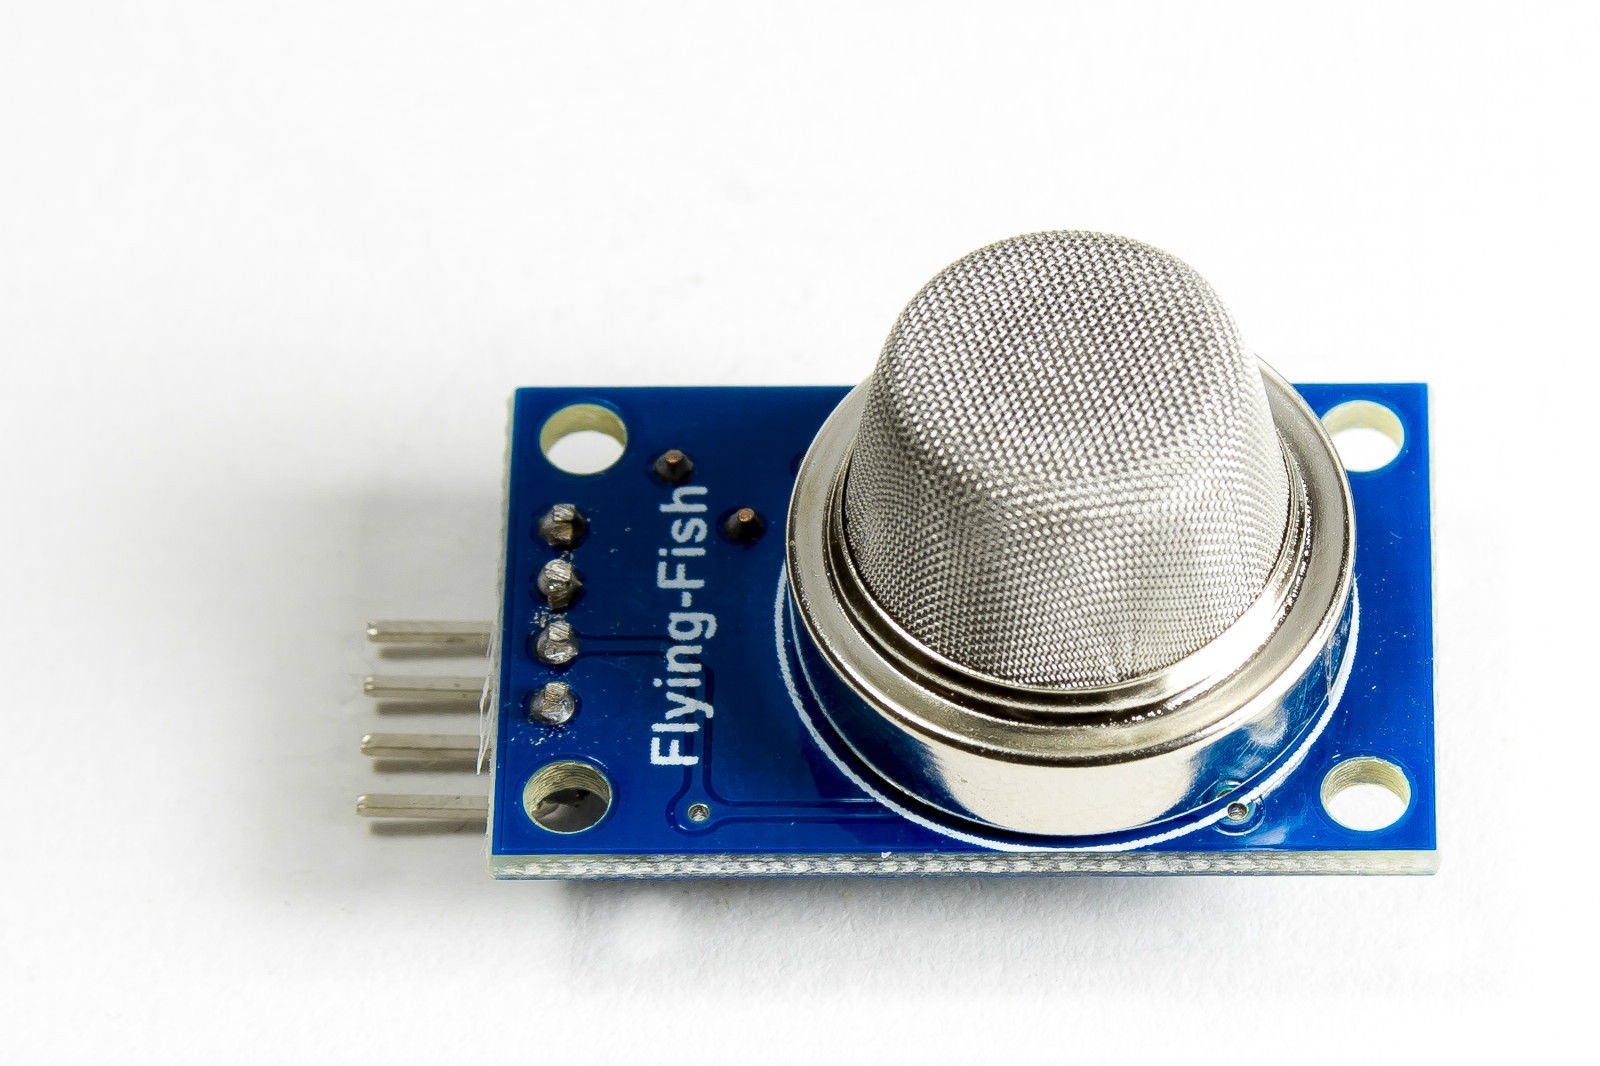 MQ-6 Gas Sensor Interfacing with Arduino UNO and LCD